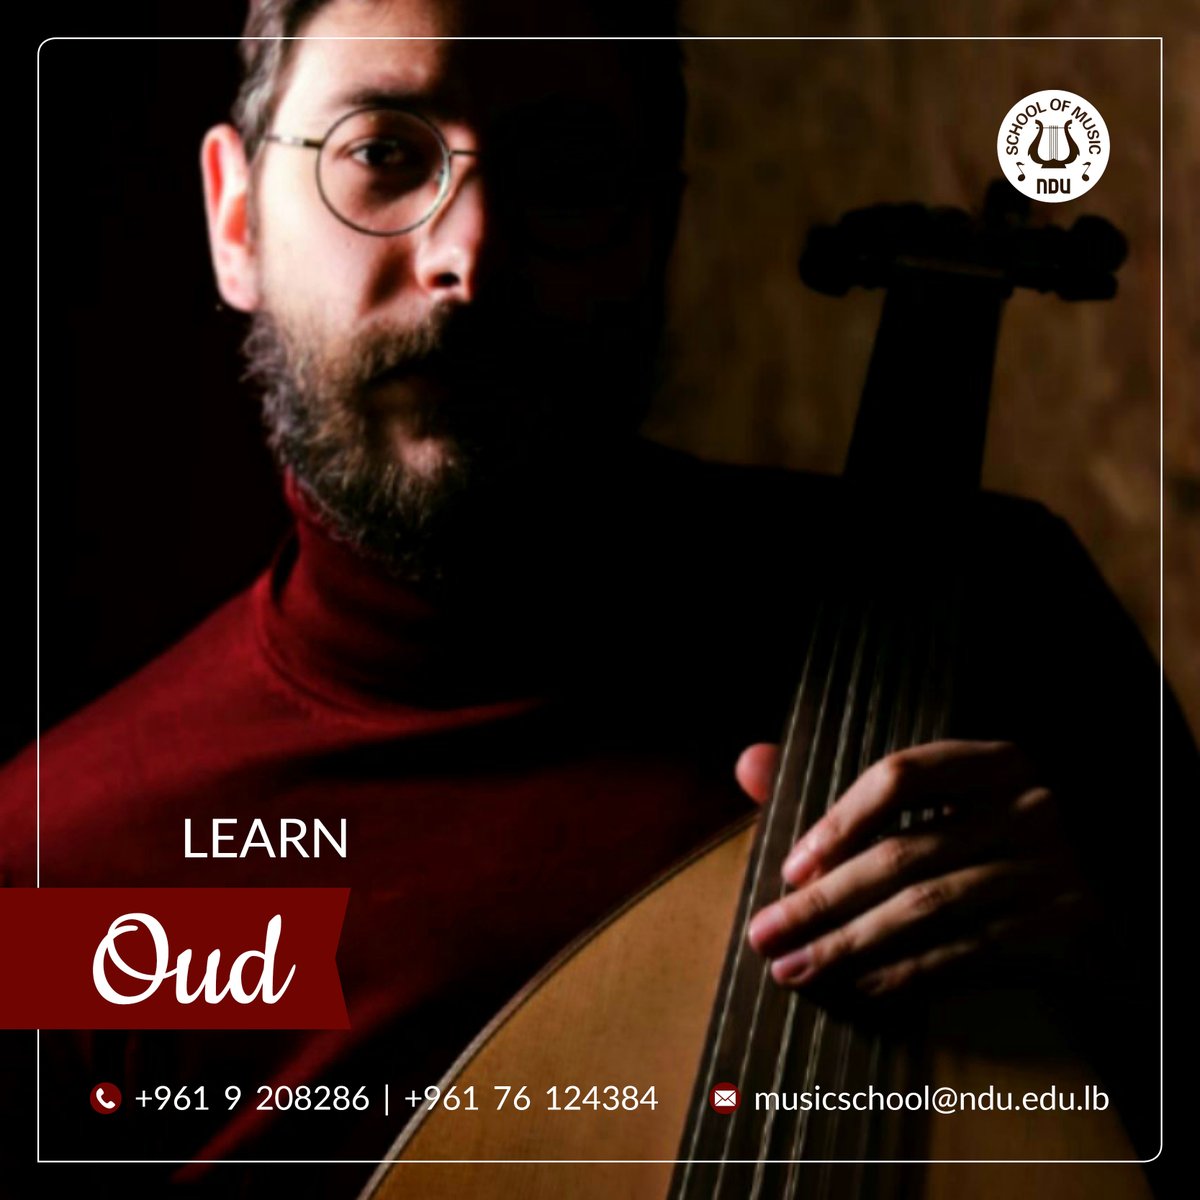 Learn 𝐎𝐔𝐃 at NDU School of Music!

𝐹𝑒𝑒𝑠: 475,000 𝐿𝐿 𝑝𝑒𝑟 𝑠𝑒𝑚𝑒𝑠𝑡𝑒𝑟 (16 𝑠𝑒𝑠𝑠𝑖𝑜𝑛𝑠 𝑜𝑣𝑒𝑟 5 𝑚𝑜𝑛𝑡ℎ𝑠).

Register today at:
𝗧: +961 9 208286
𝗠: +961 76 124384
𝗘: musicschool@ndu.edu.lb

#oud #orientalmusic #learnoud #ndusom #musicschool #learnmusic